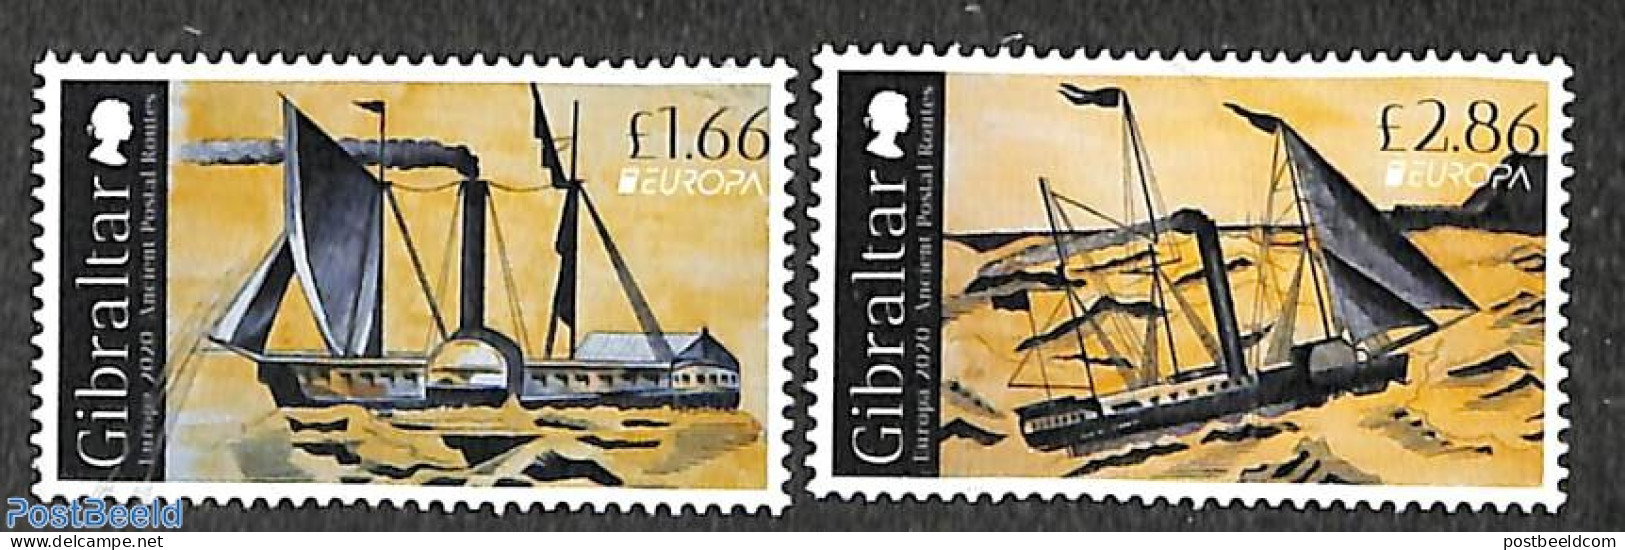 Gibraltar 2020 Europa, Old Postal Roads 2v, Mint NH, History - Transport - Europa (cept) - Post - Ships And Boats - Posta